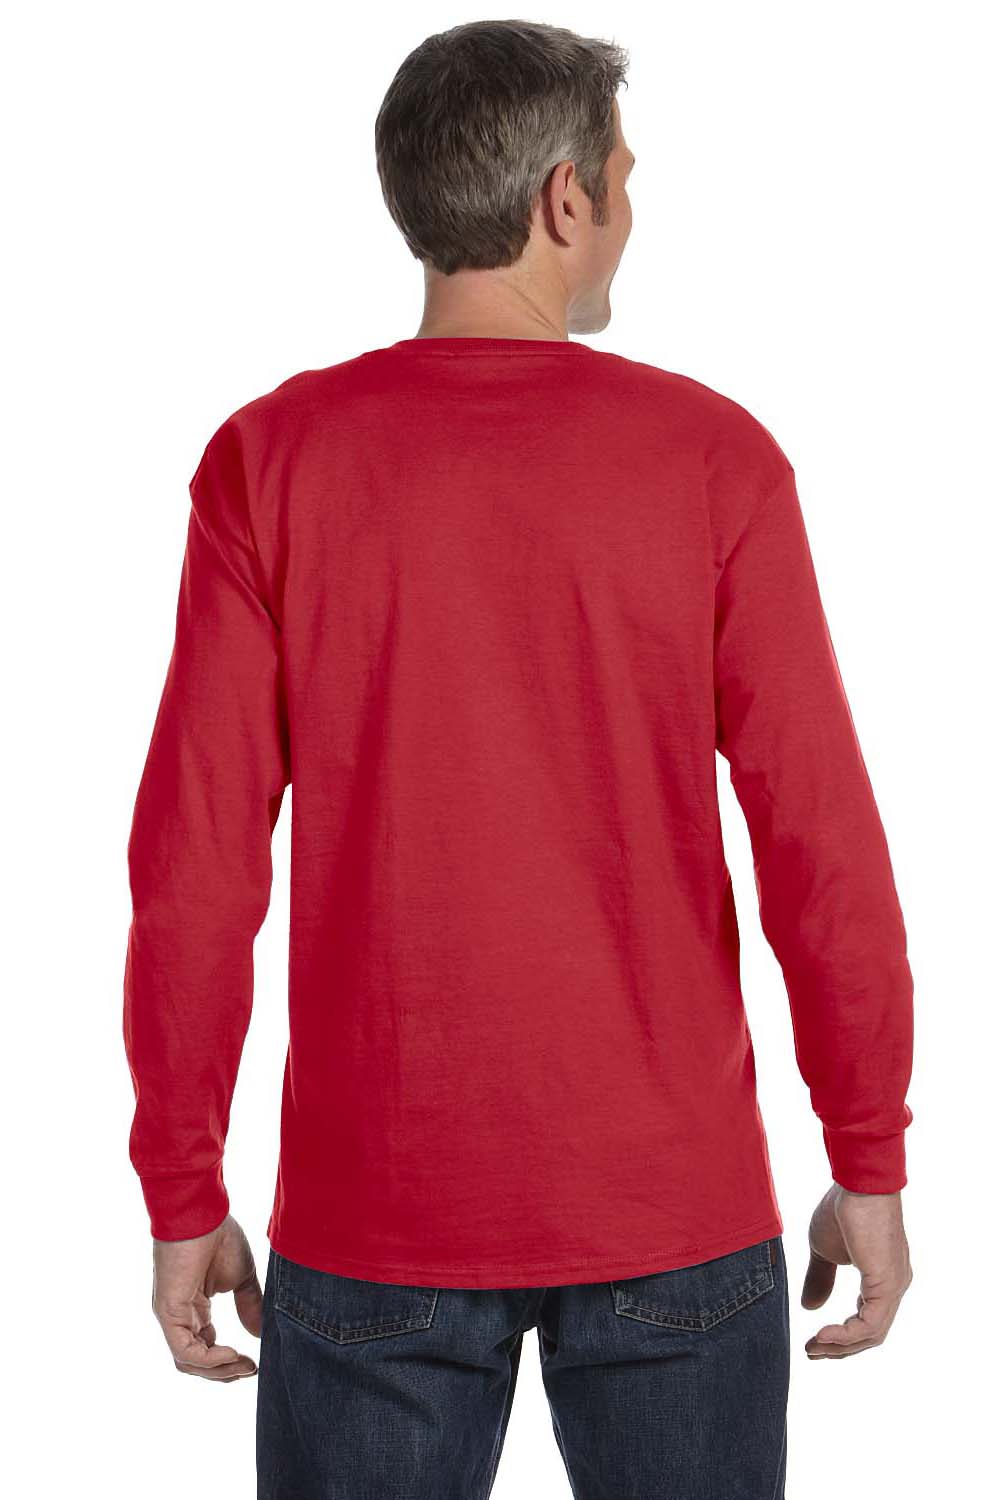 Jerzees 29L Mens Dri-Power Moisture Wicking Long Sleeve Crewneck T-Shirt Red Back